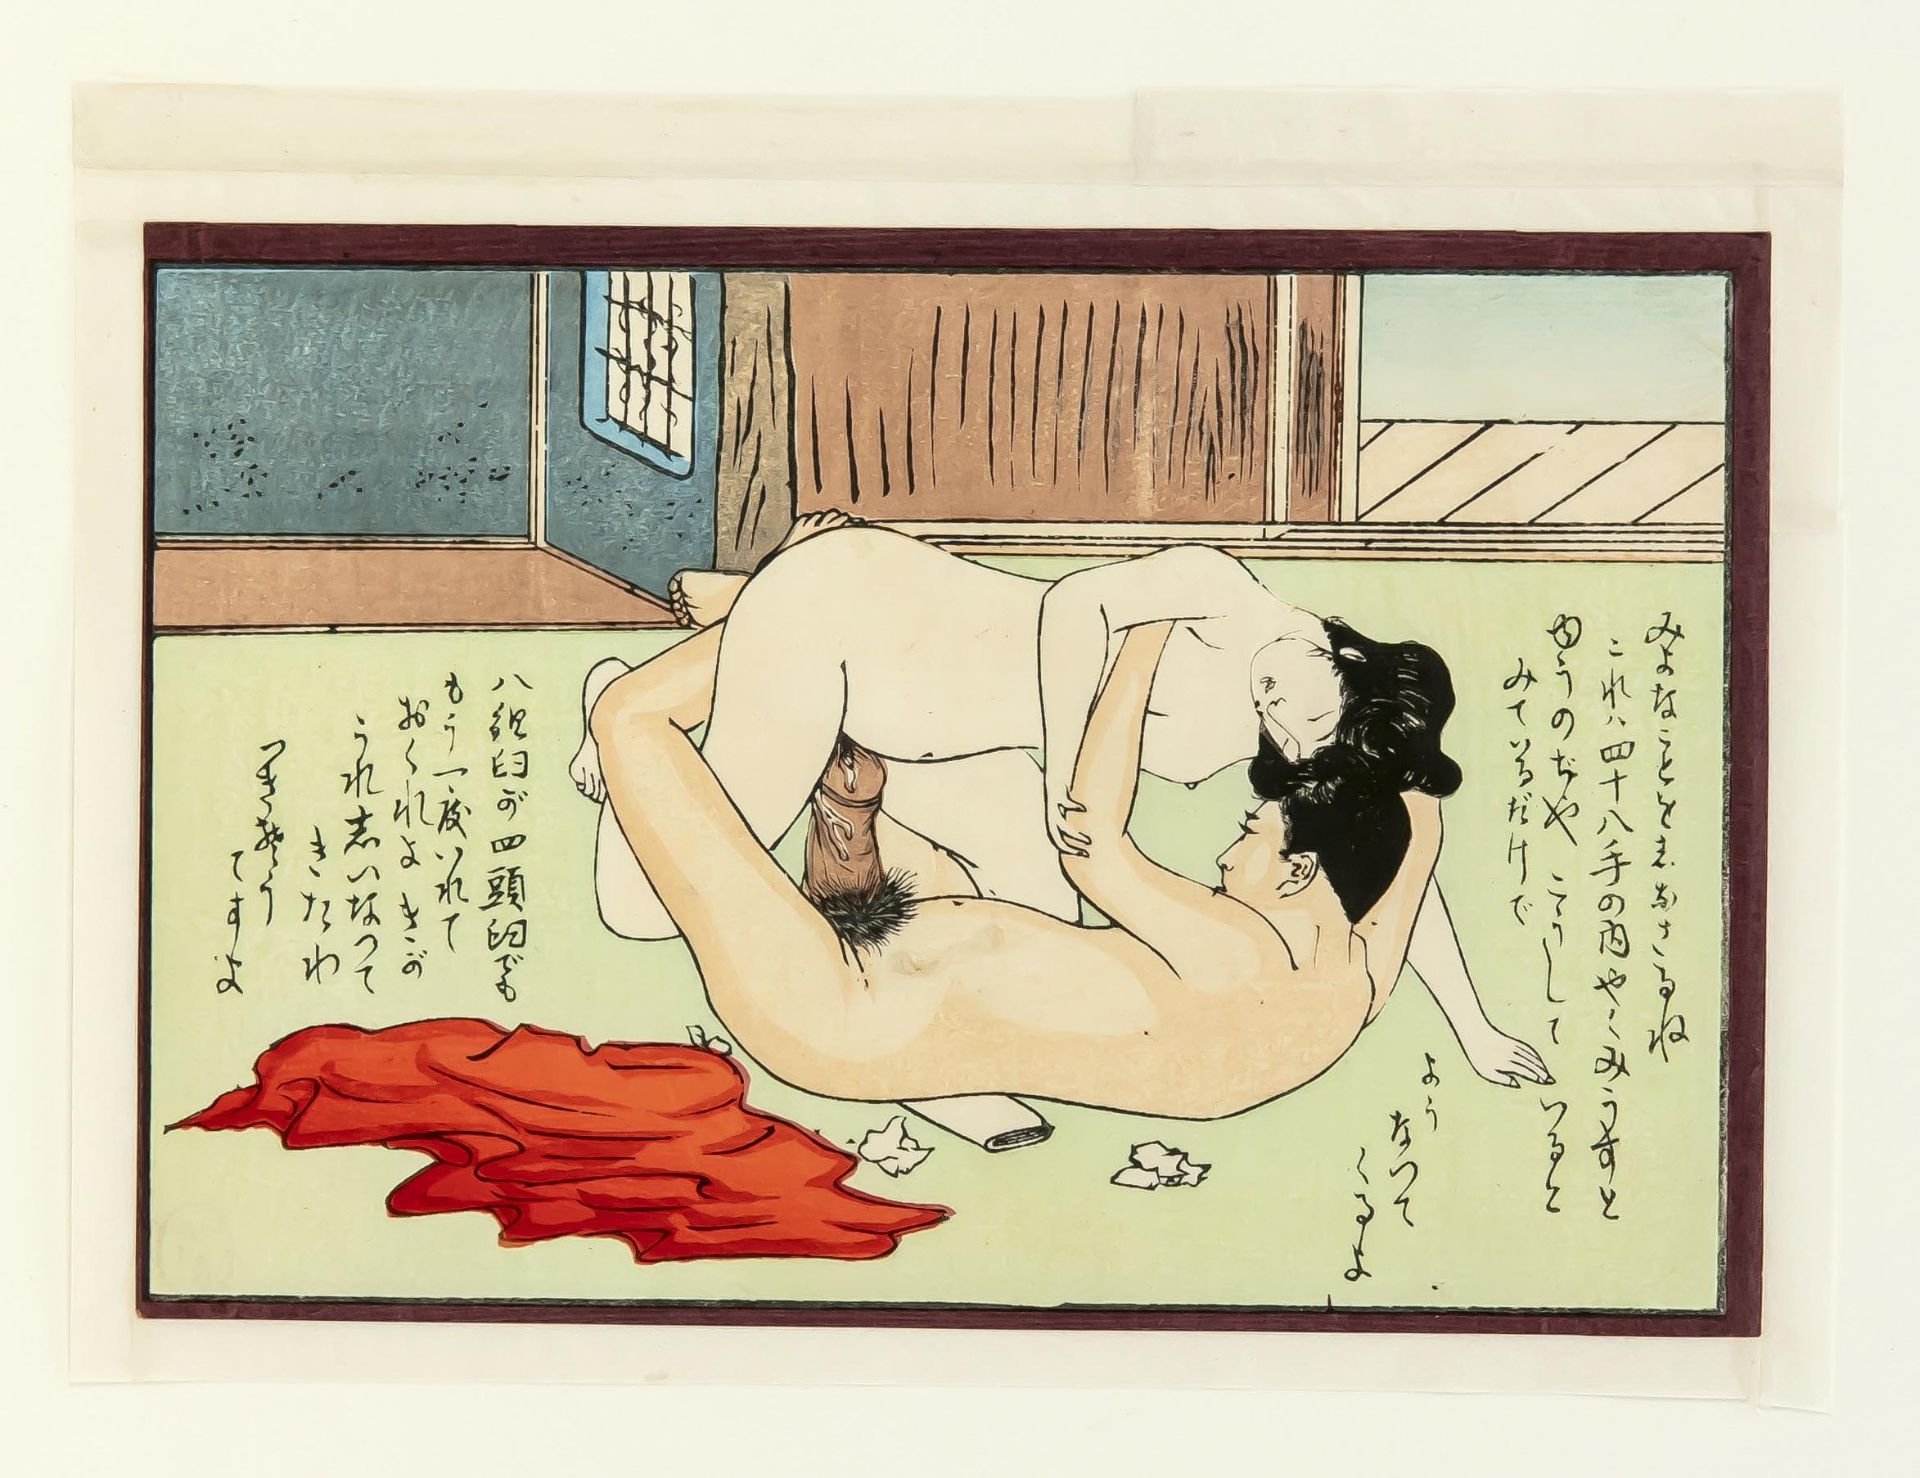 3 erotic prints (shunga), Japan, 20th century, polychrome woodblock prints. All with passe-